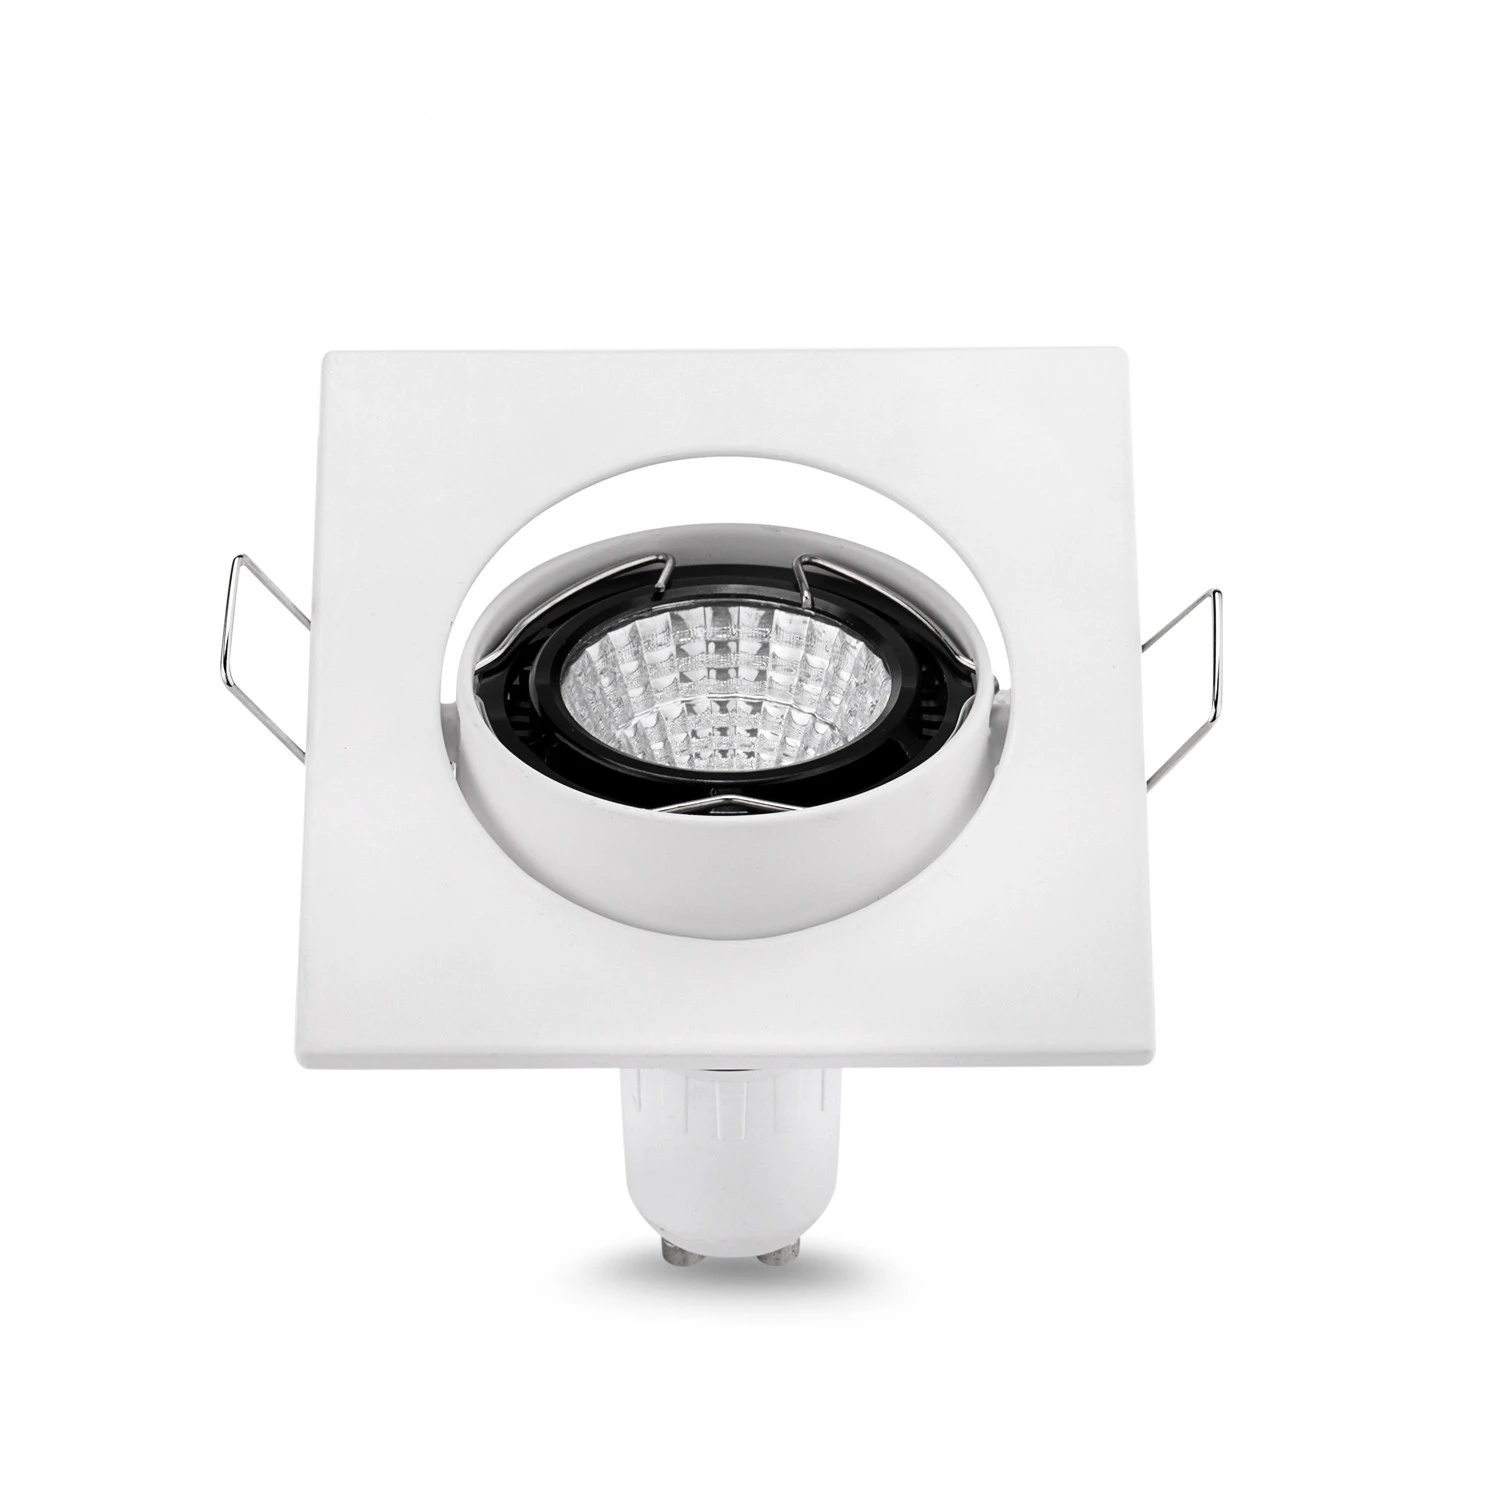 

4pcs Embedded Square MR16 GU10 LED Downlight Spot Lights Ceiling Lamp for Home Illumination Lighting Fixtures Spotlight